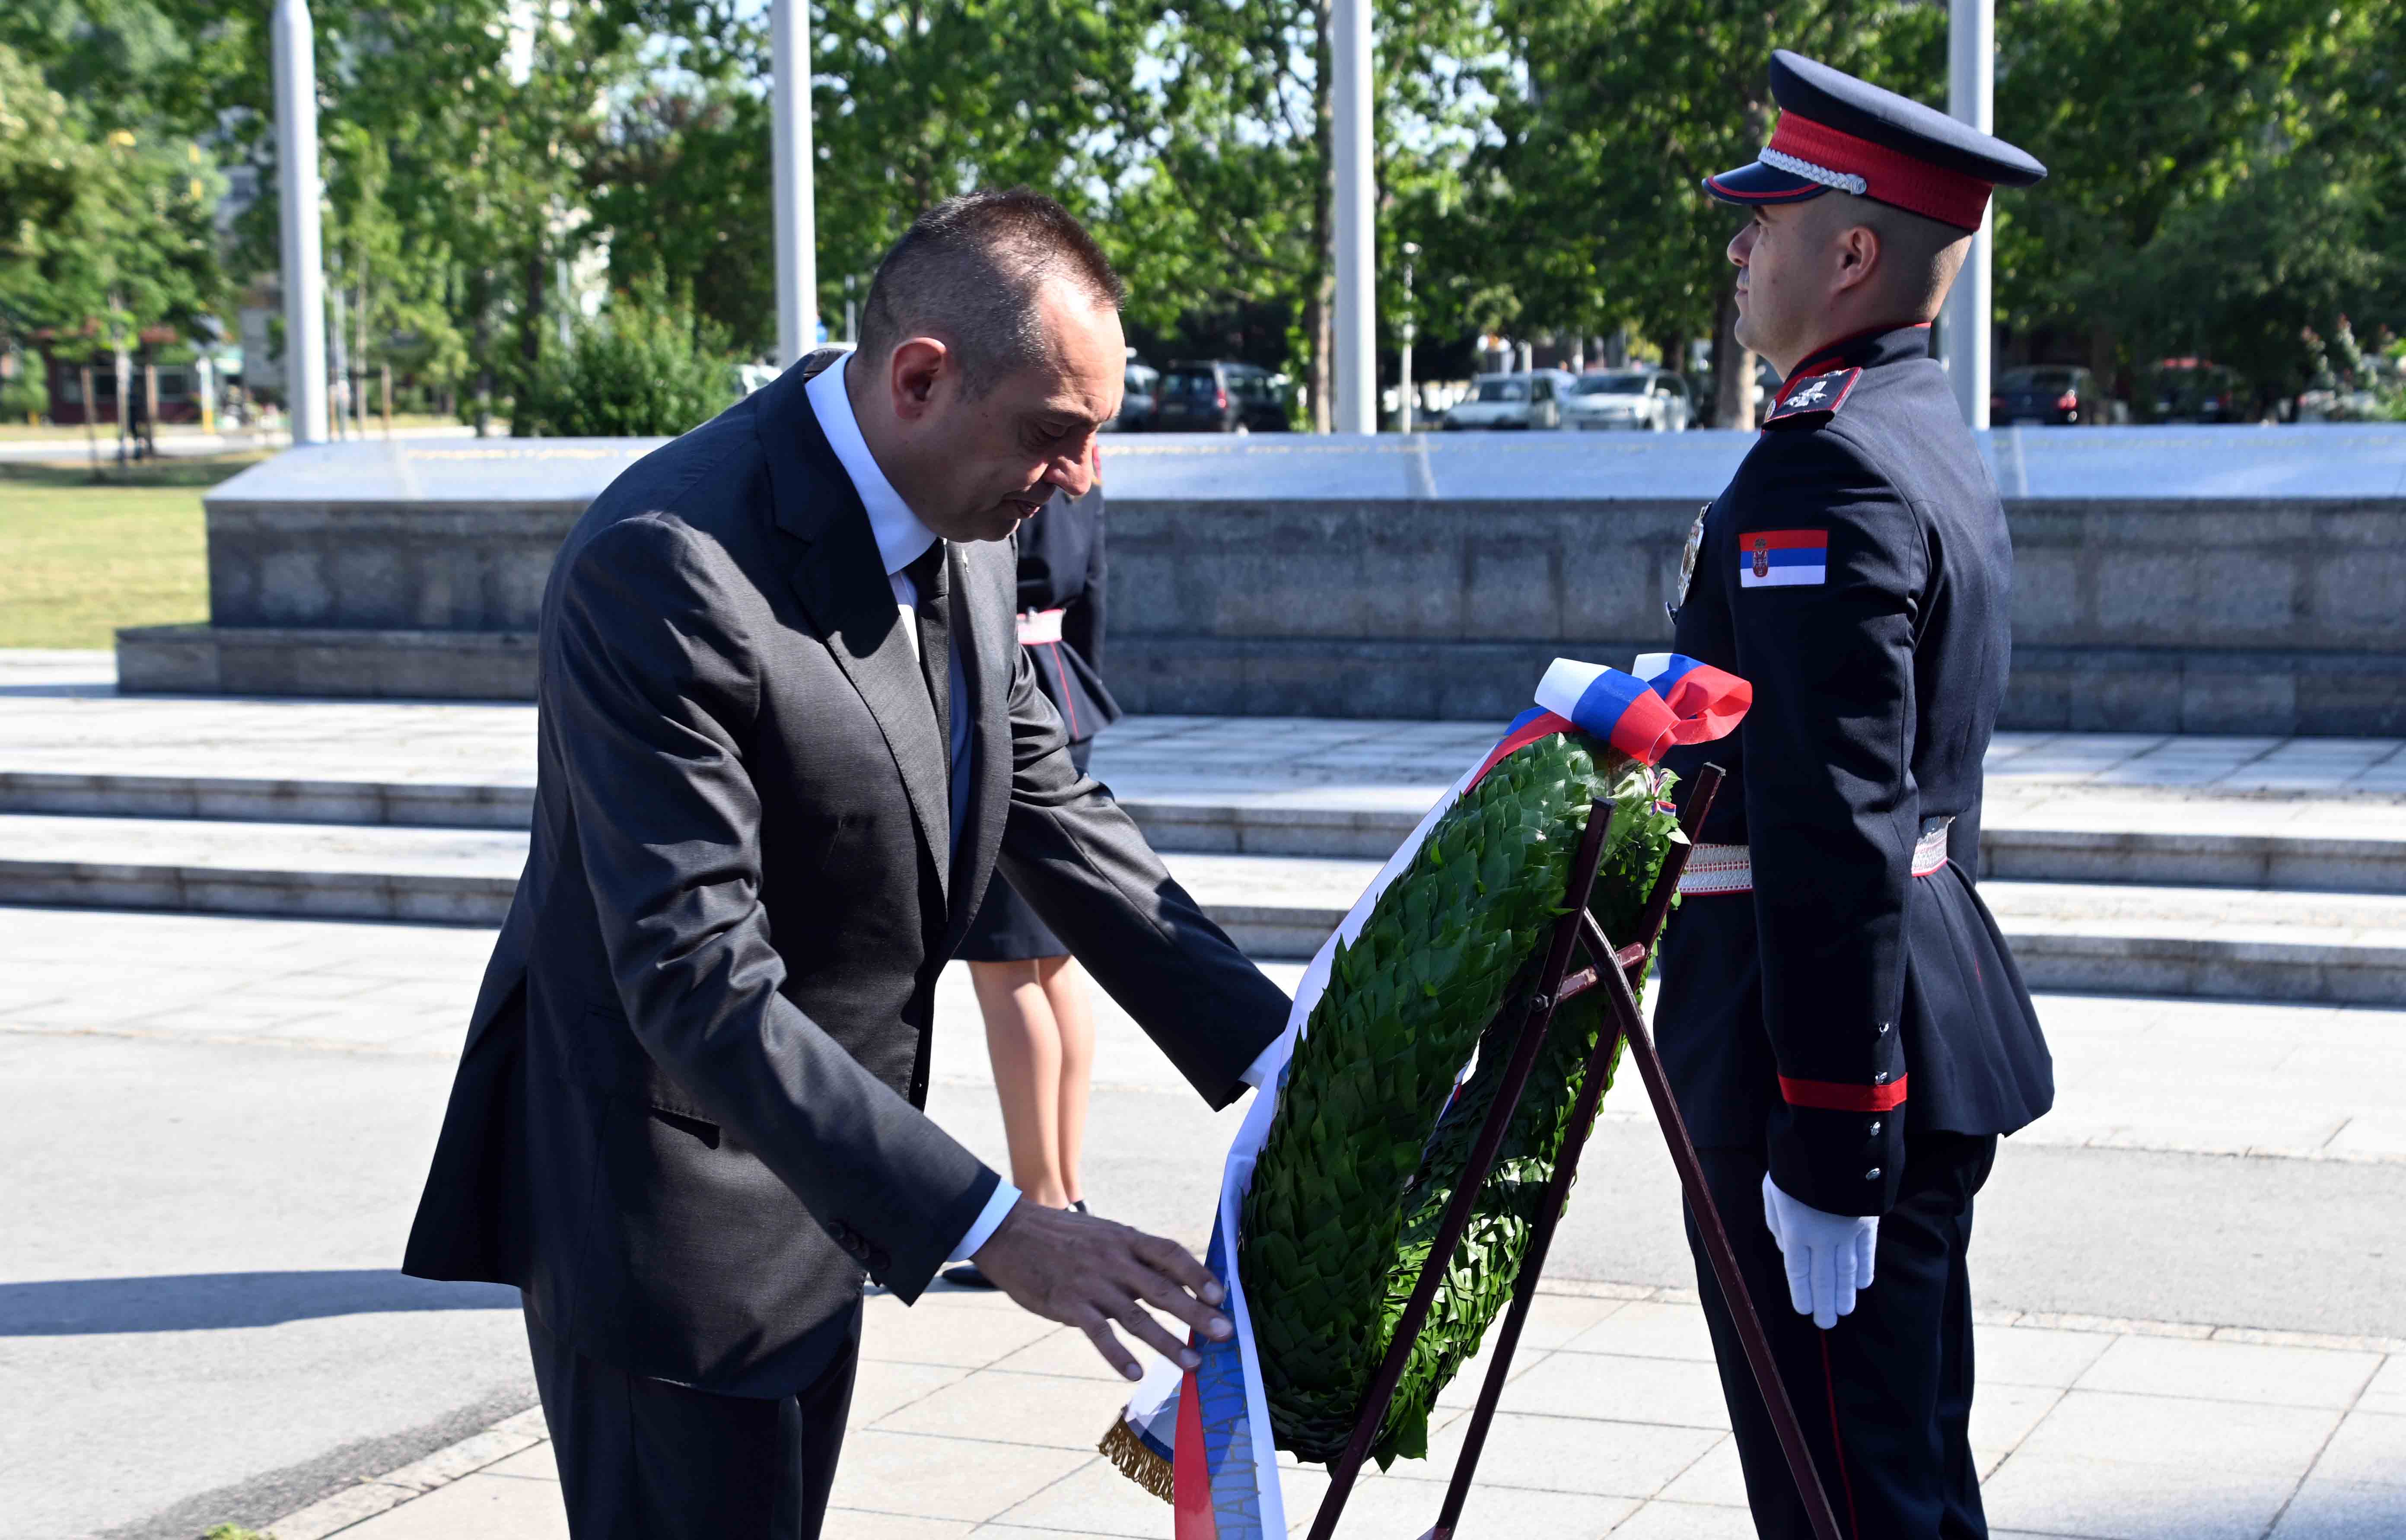 Ministar Vulin položio je venac na spomen-obeležje u znak sećanja na pripadnike MUP-a koji su žrtvovali svoje živote